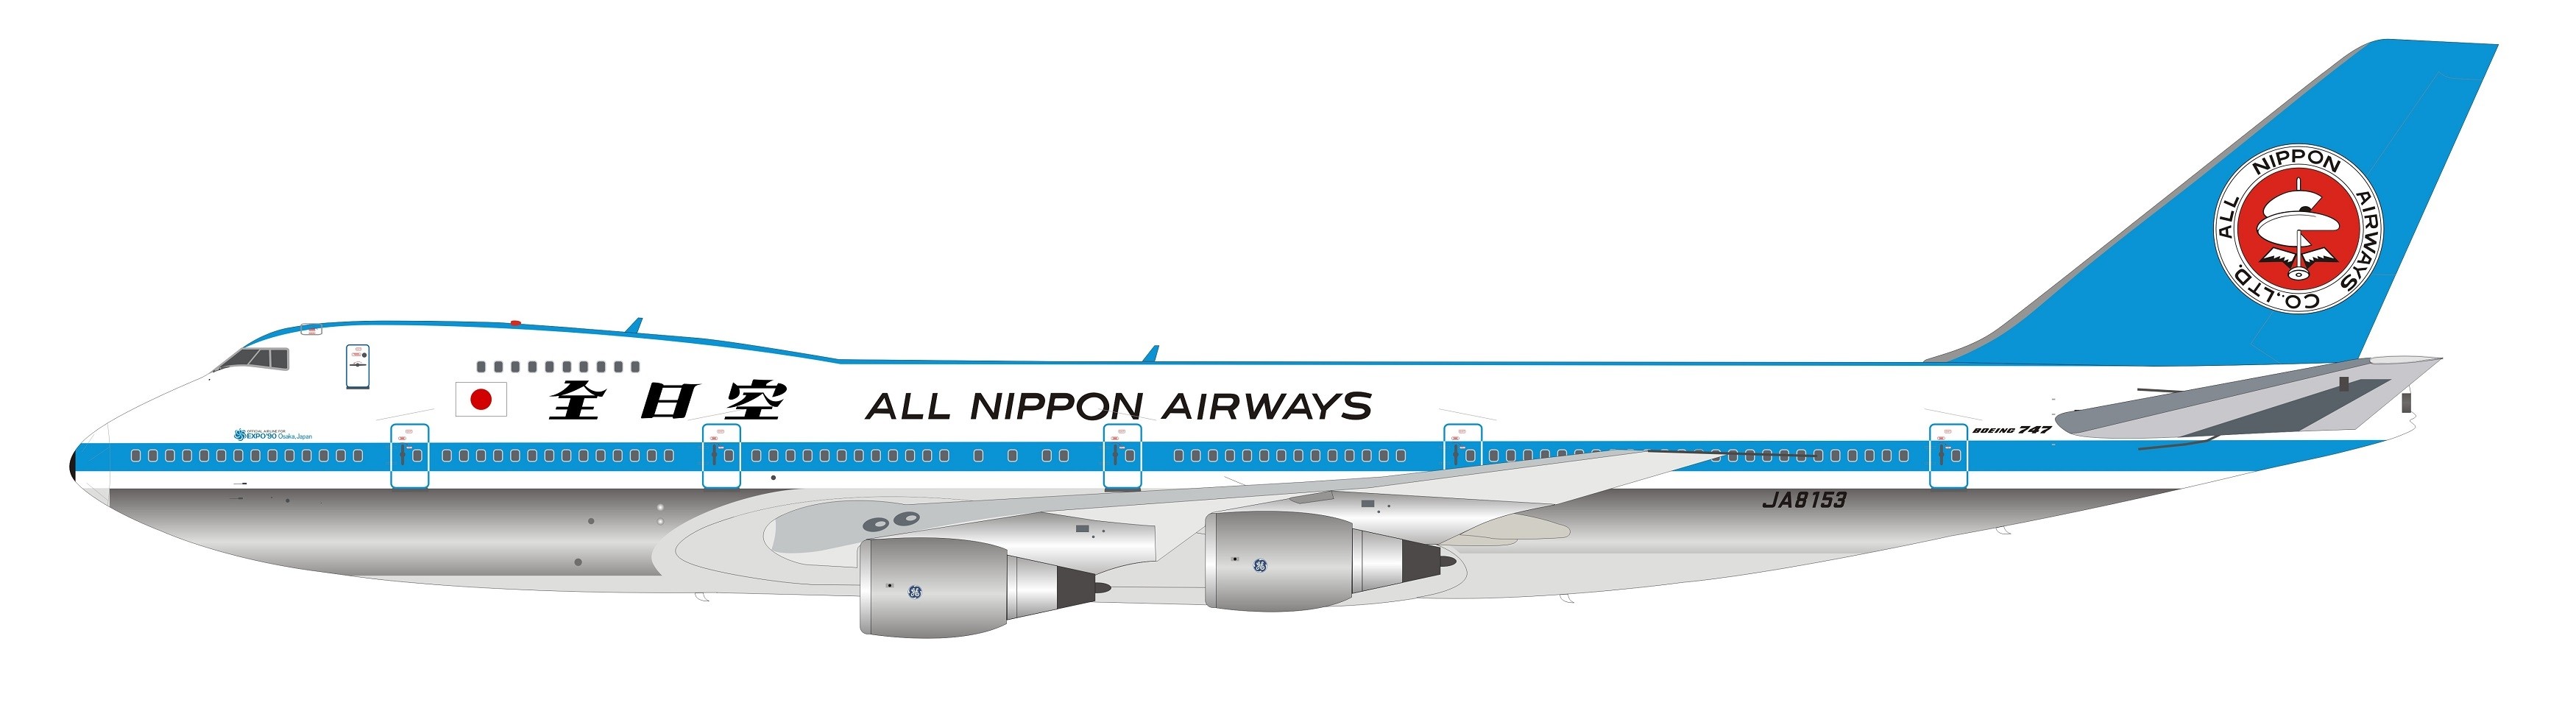 All Nippon Mohican ANA Boeing 747SR-81 JA8153 OSAKA EXPO 90 LOGO InFlight  B-747SR-ANA-02P 1:200